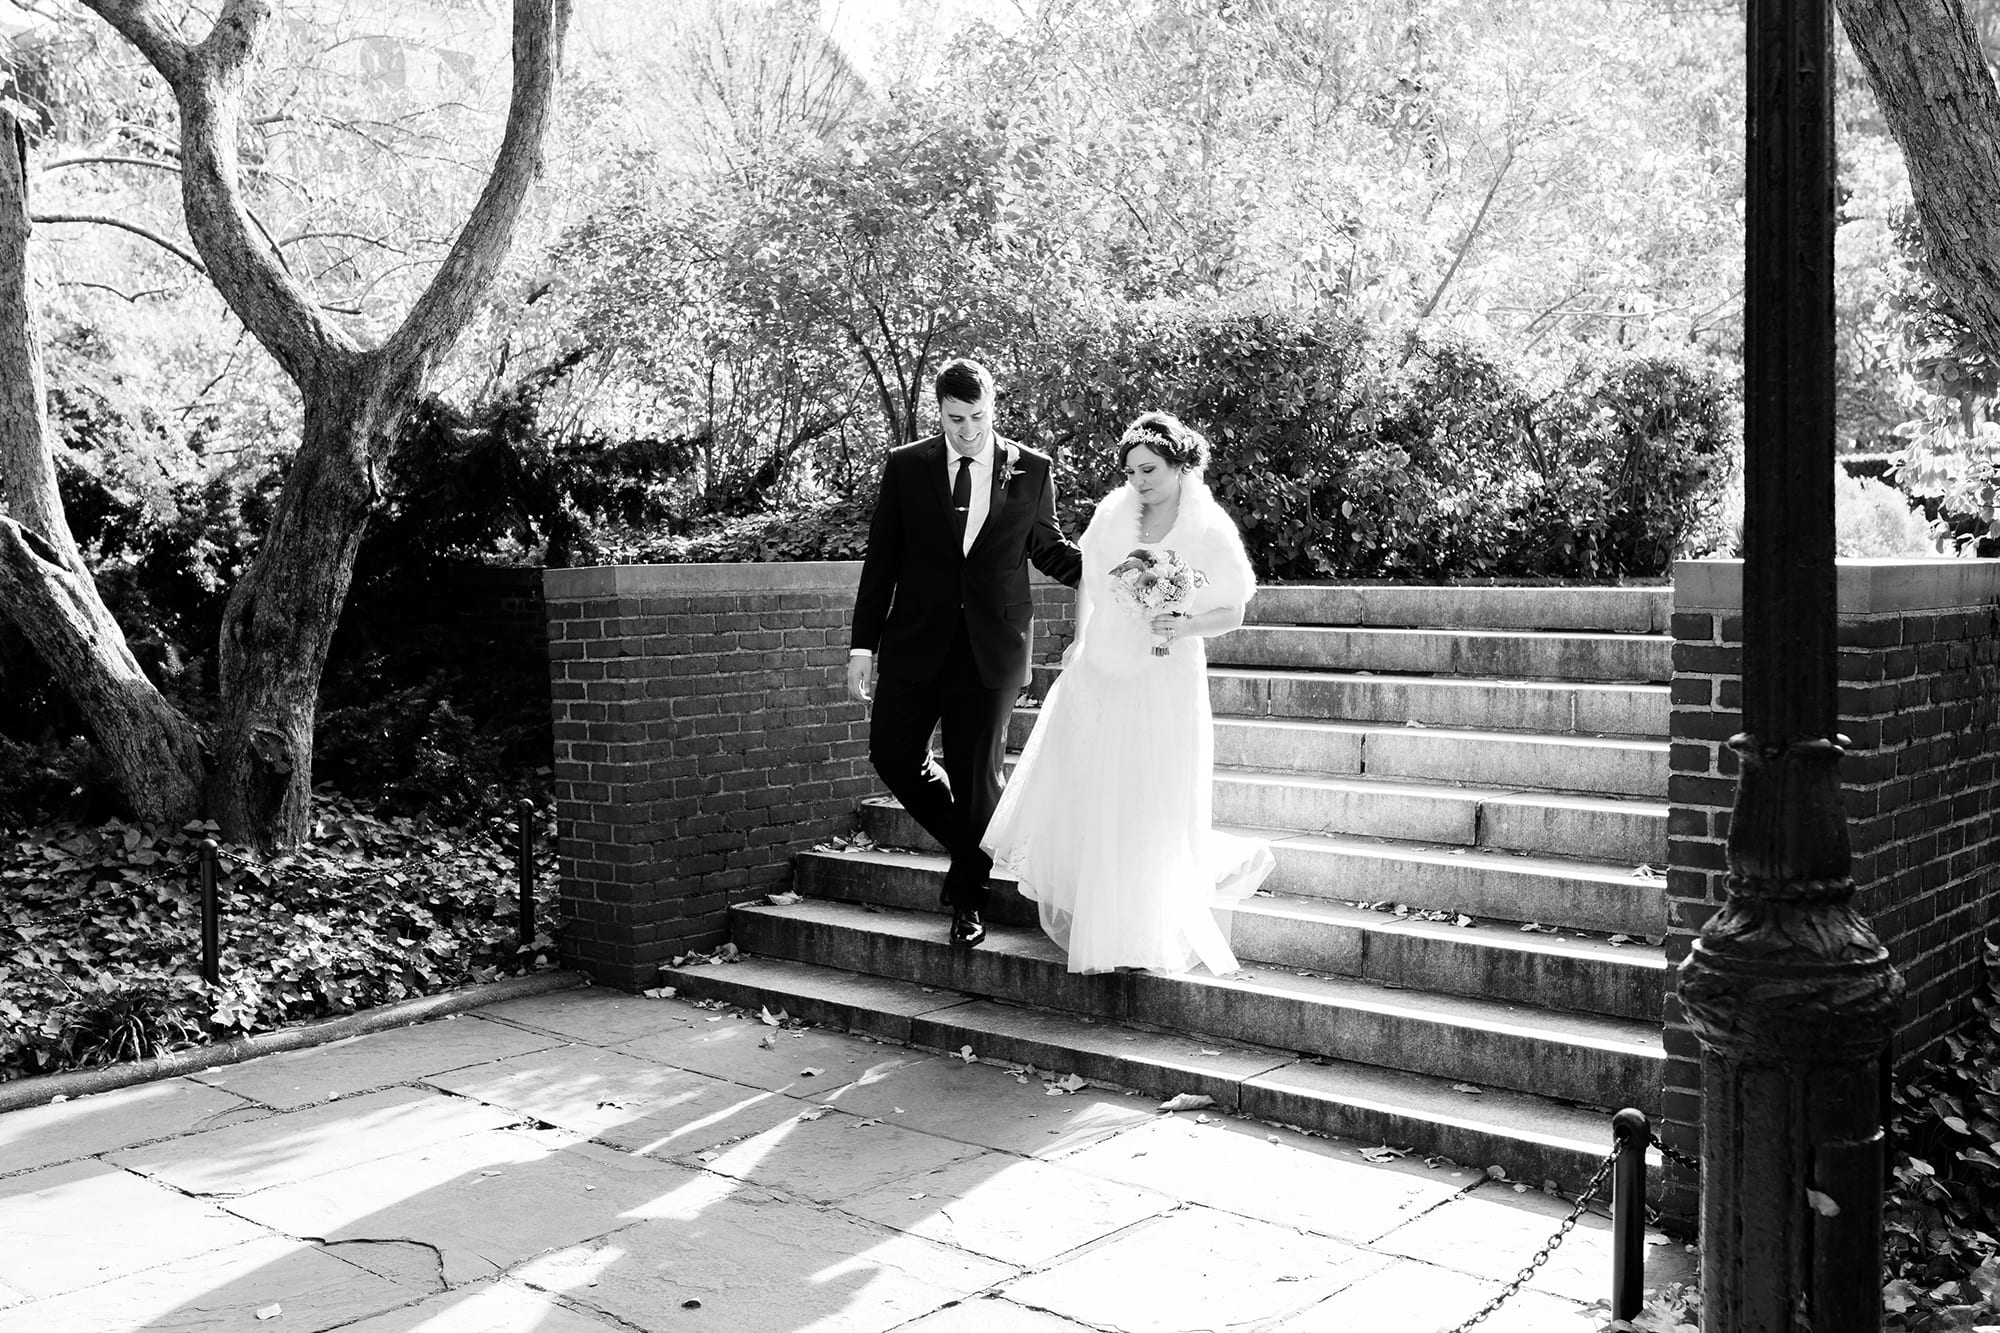 Micro-wedding in Central Park Conservatory Garden